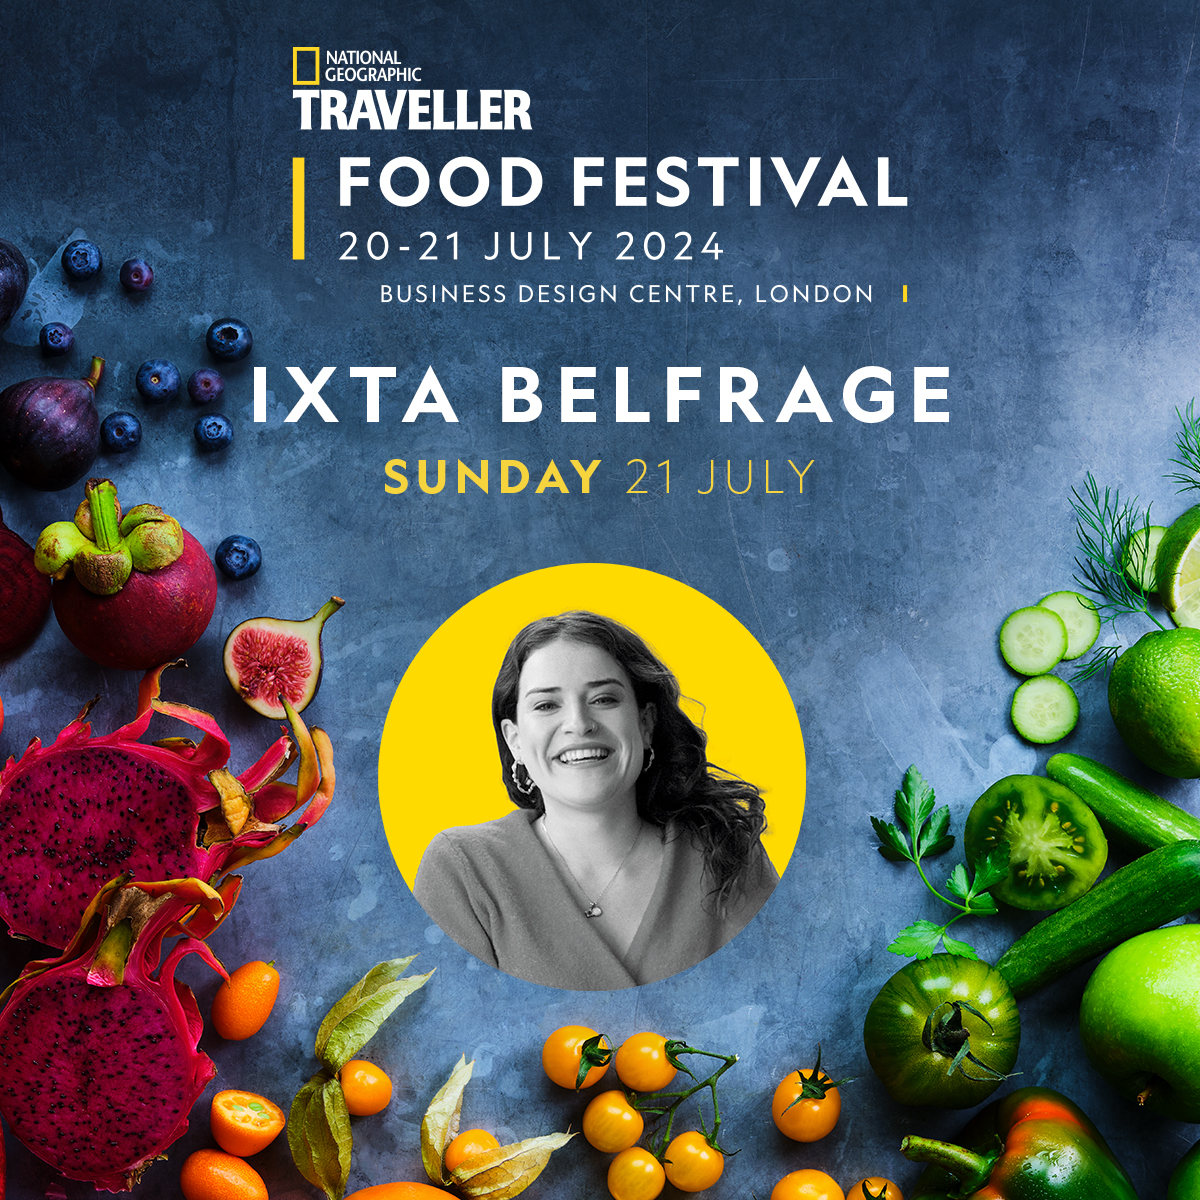 National Geographic Traveller Food Festival 2024